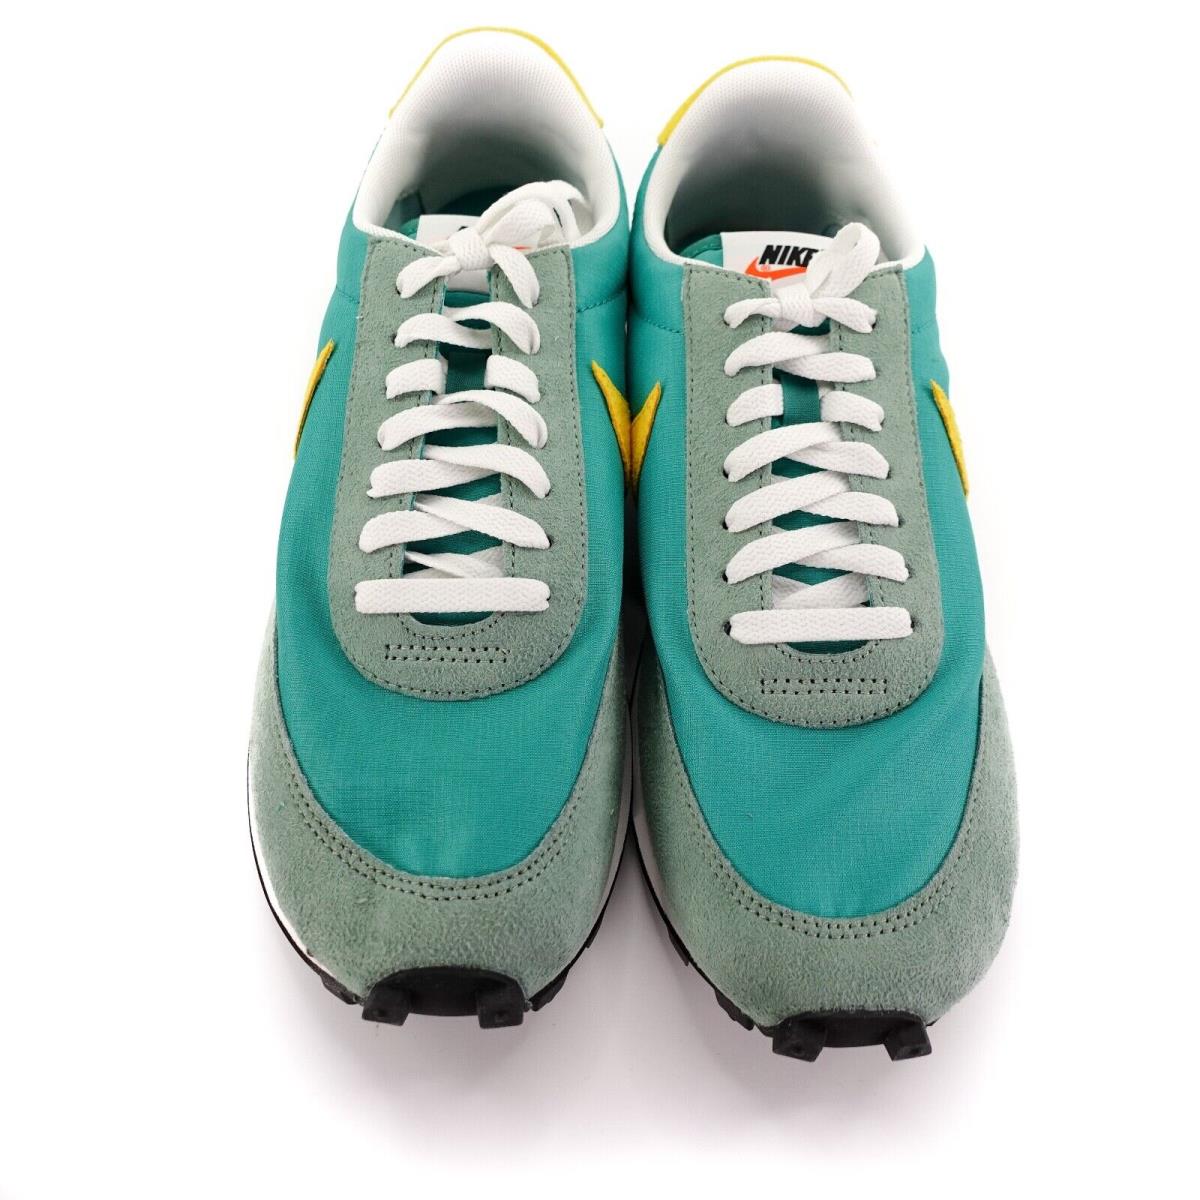 Nike nike daybreak turquoise Daybreak SP Shoes DA0824 300 Neptune Green Speed Yellow Size